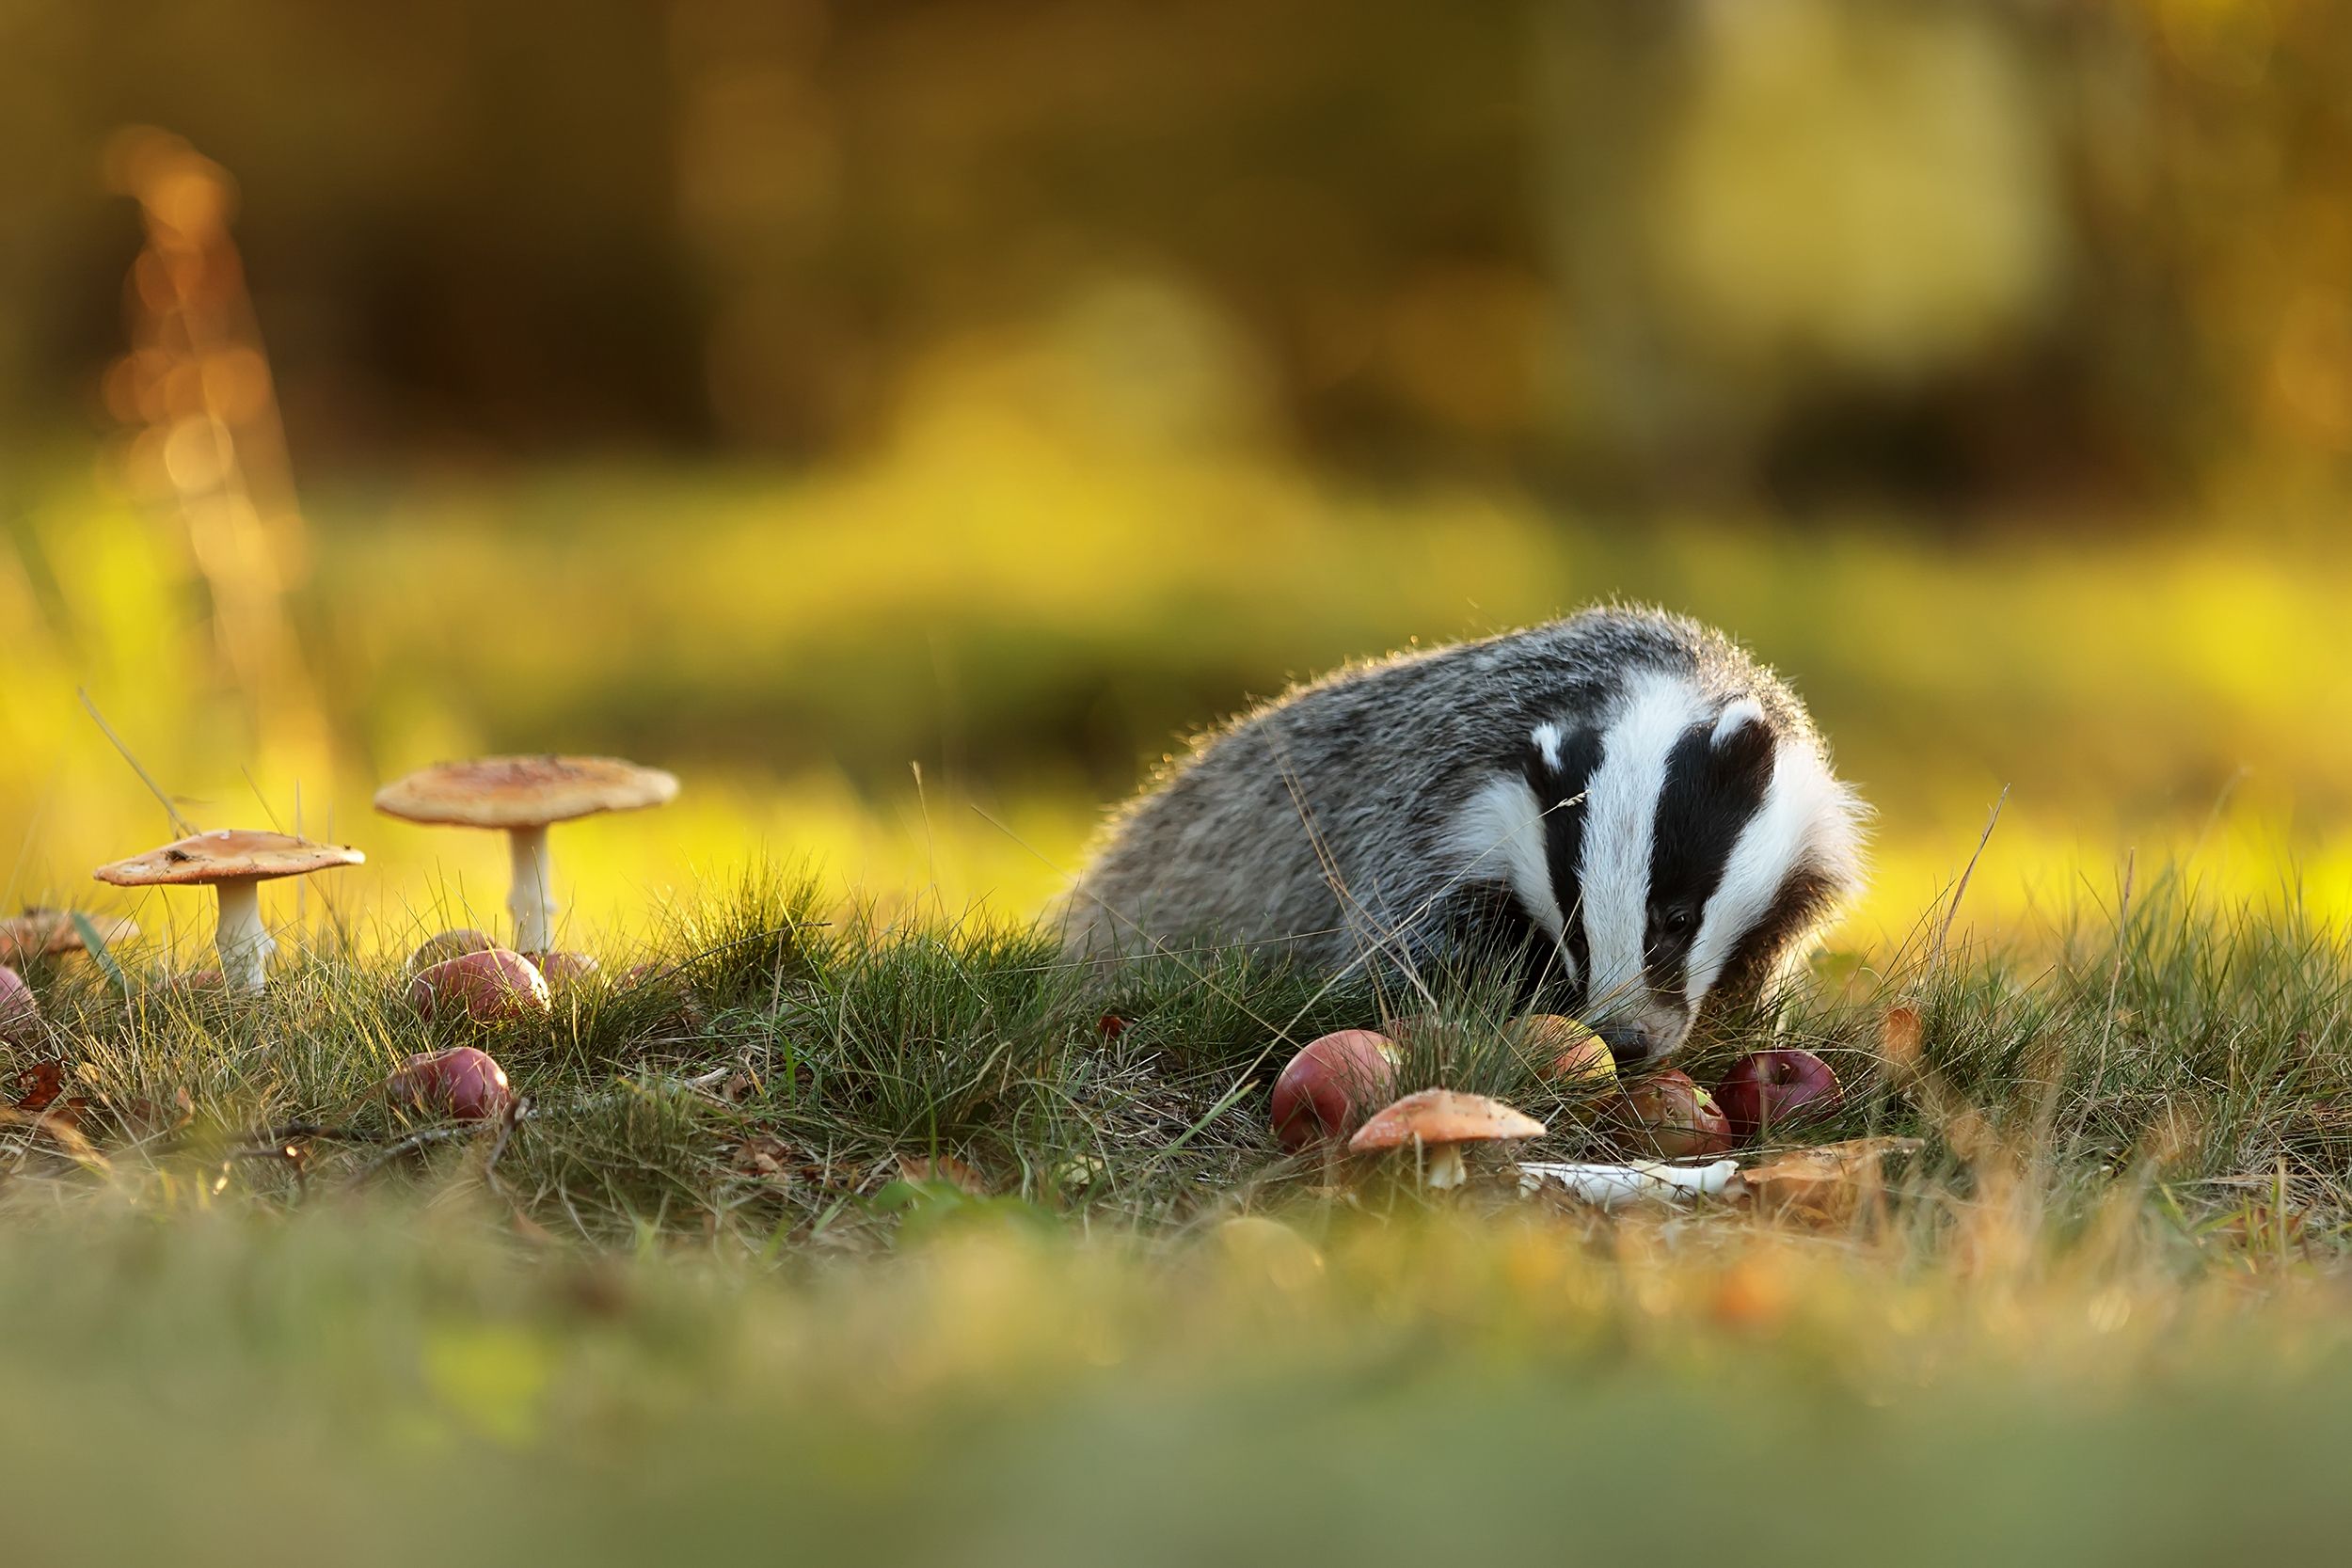 Badger-Michal-Ninger-Shutterstock-header-Living-With-Mammals-Autumn